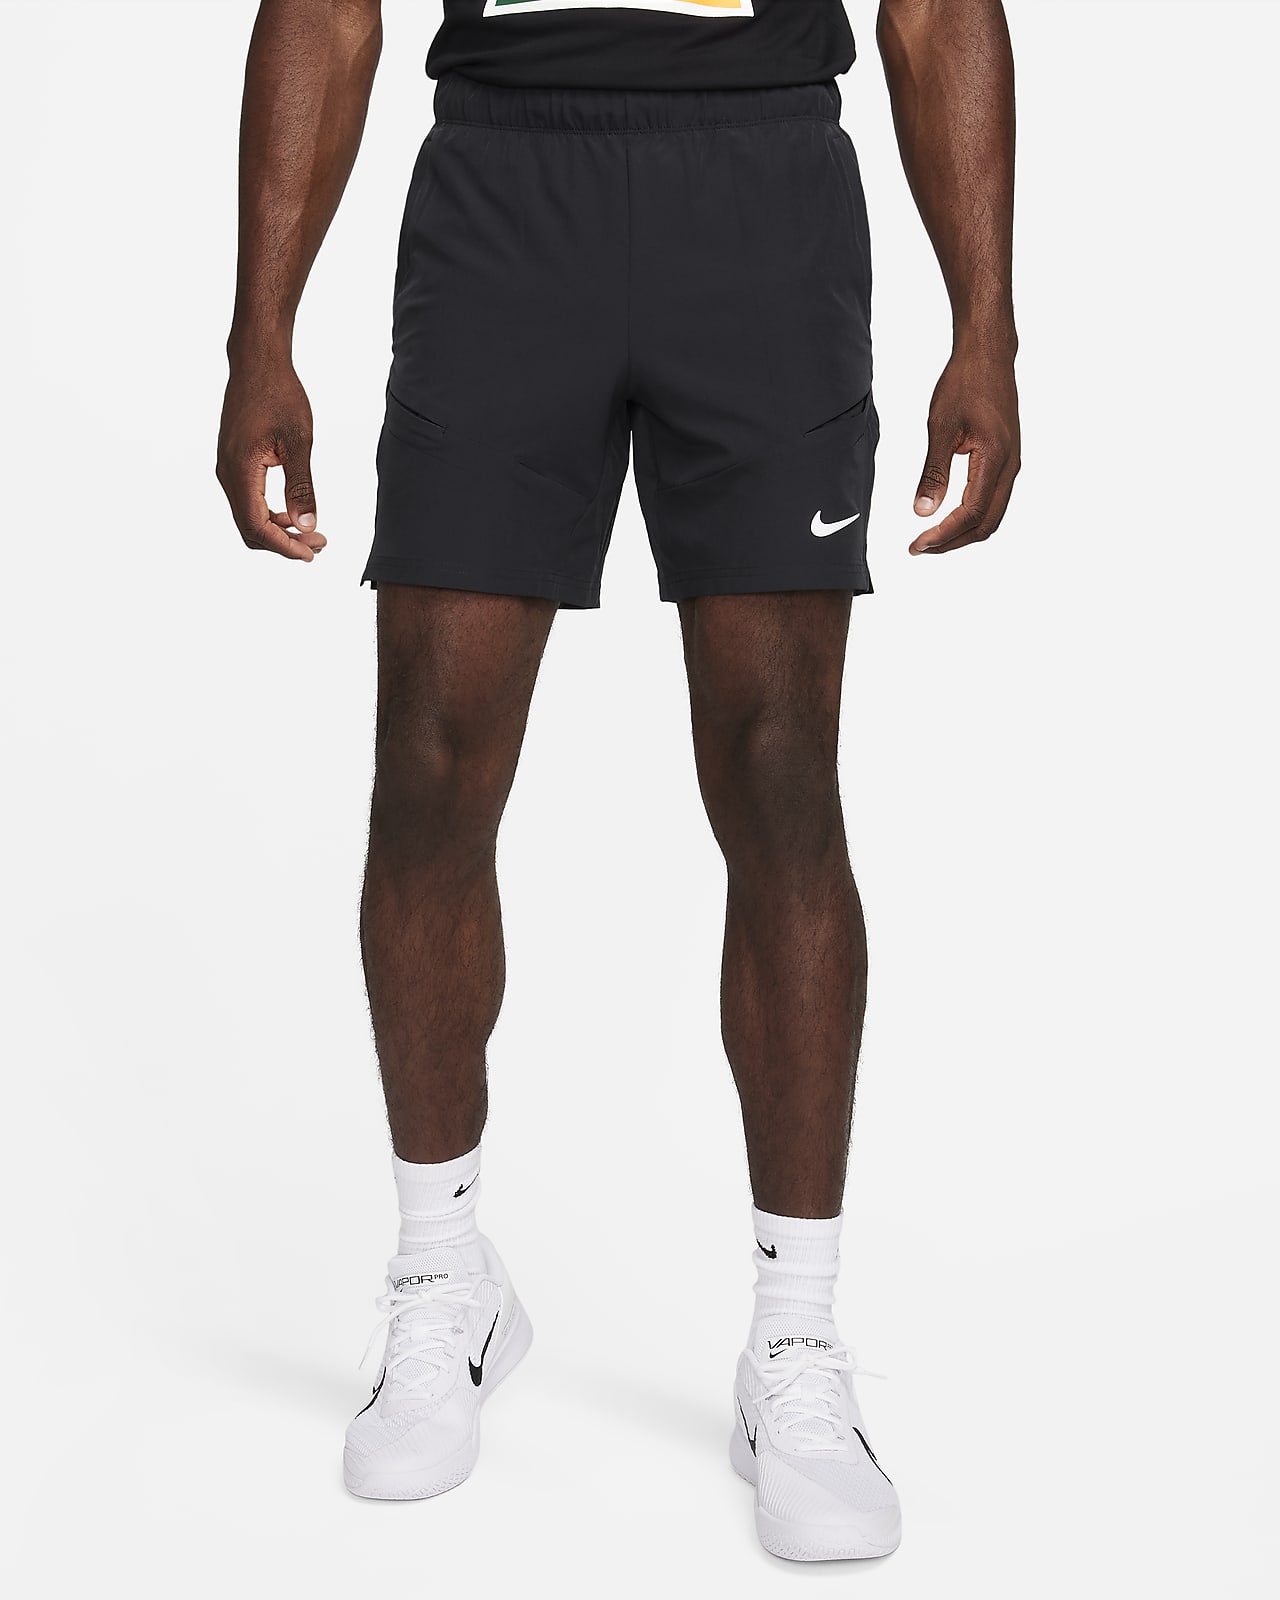 NikeCourt Advantage Dri-FIT tennisshorts (18 cm) til herre